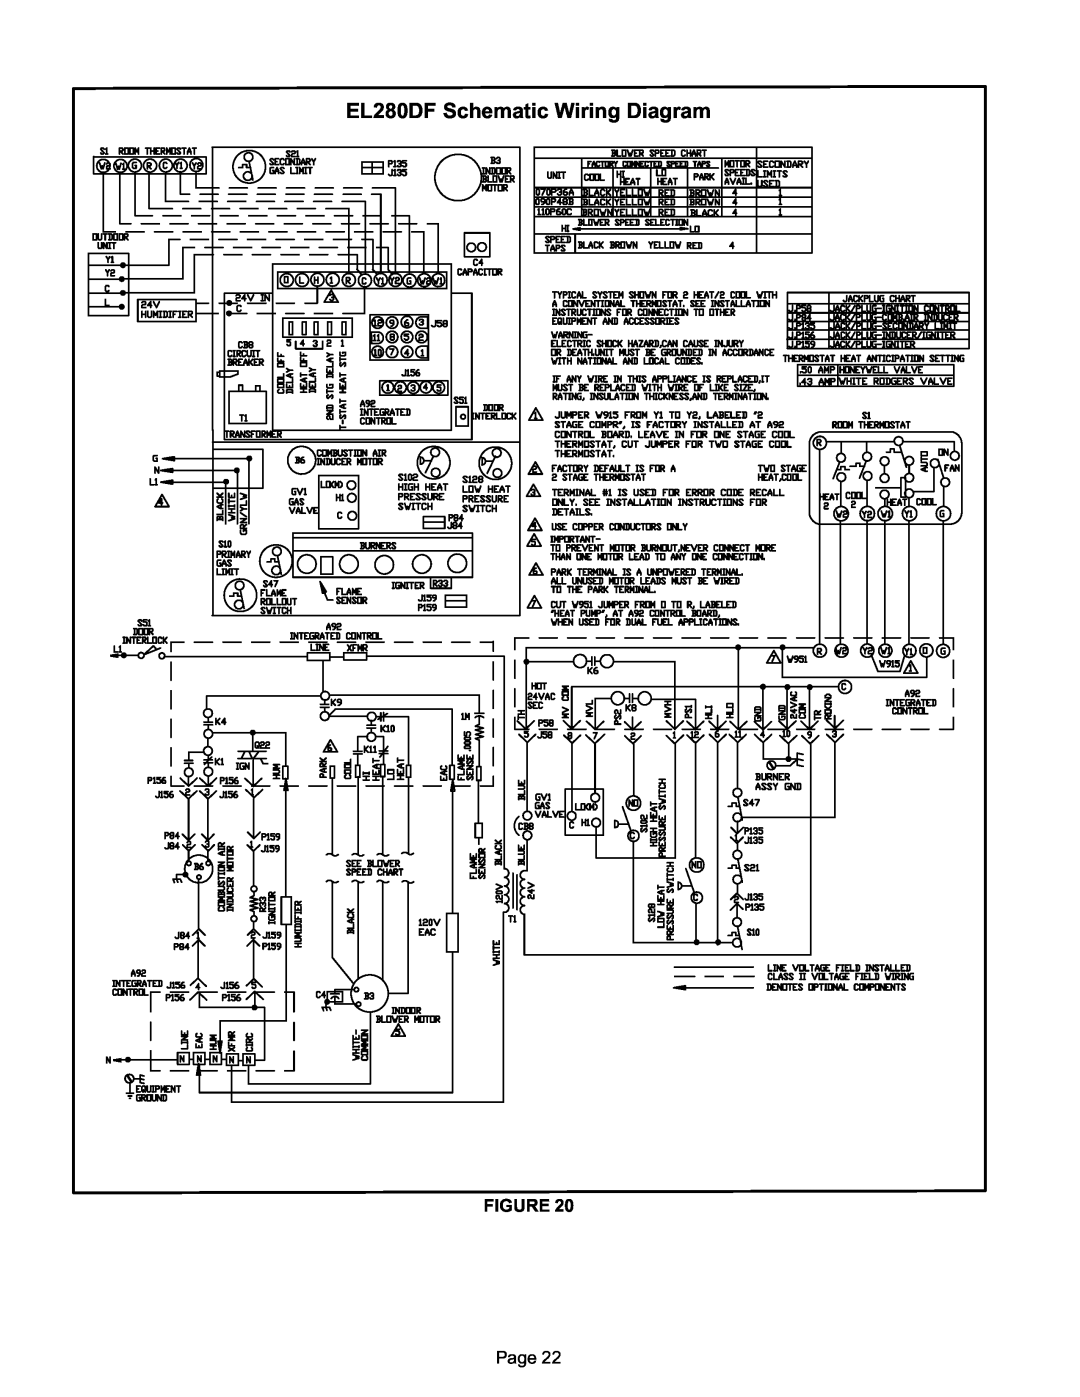 Lennox International Inc installation instructions EL280DF Schematic Wiring Diagram, Page 